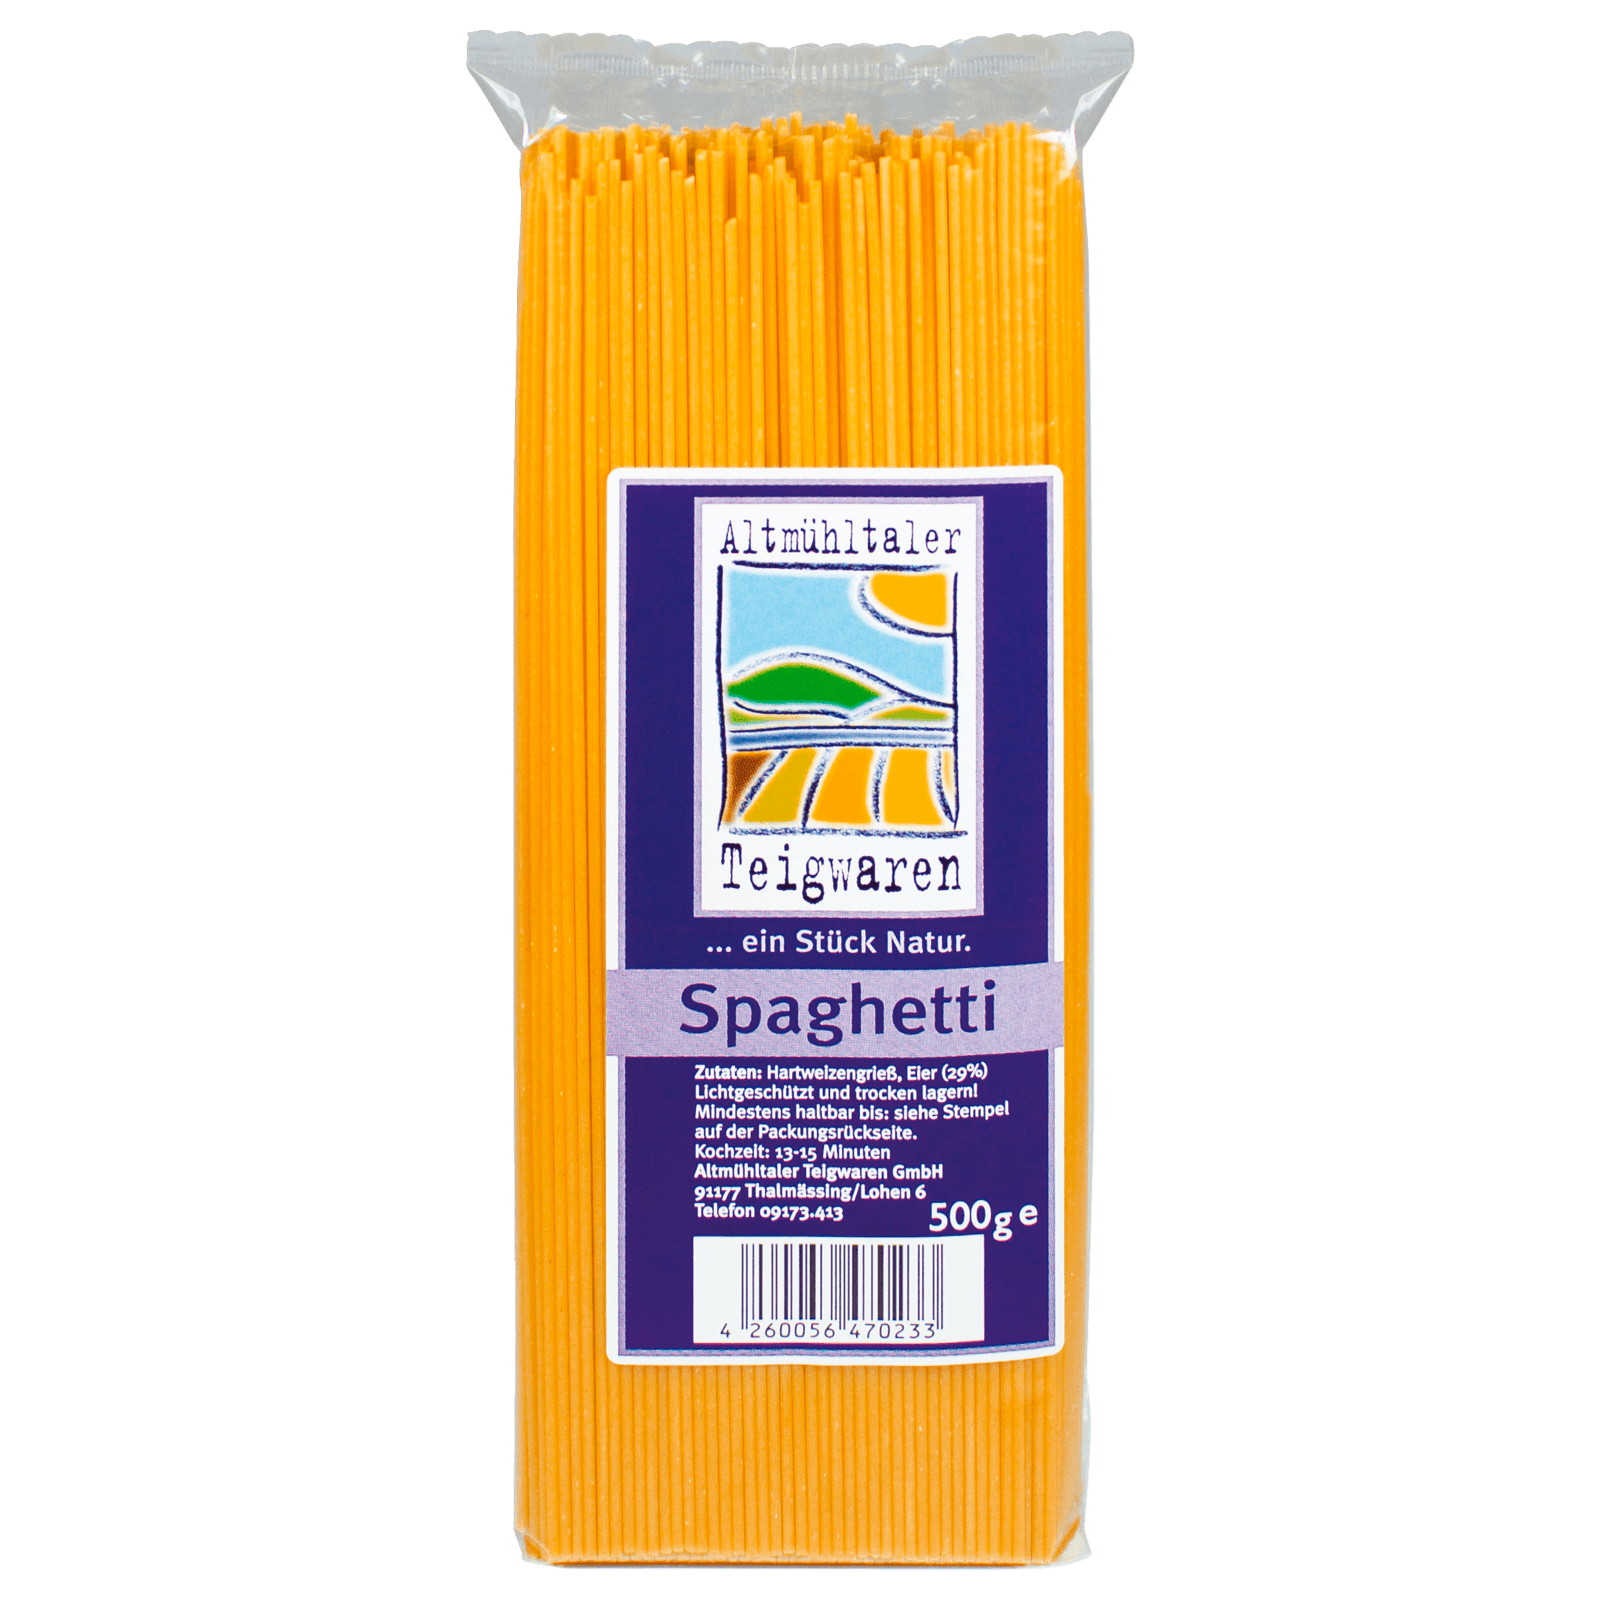 Altmuhltaler Spaghetti 500g Bei Rewe Online Bestellen